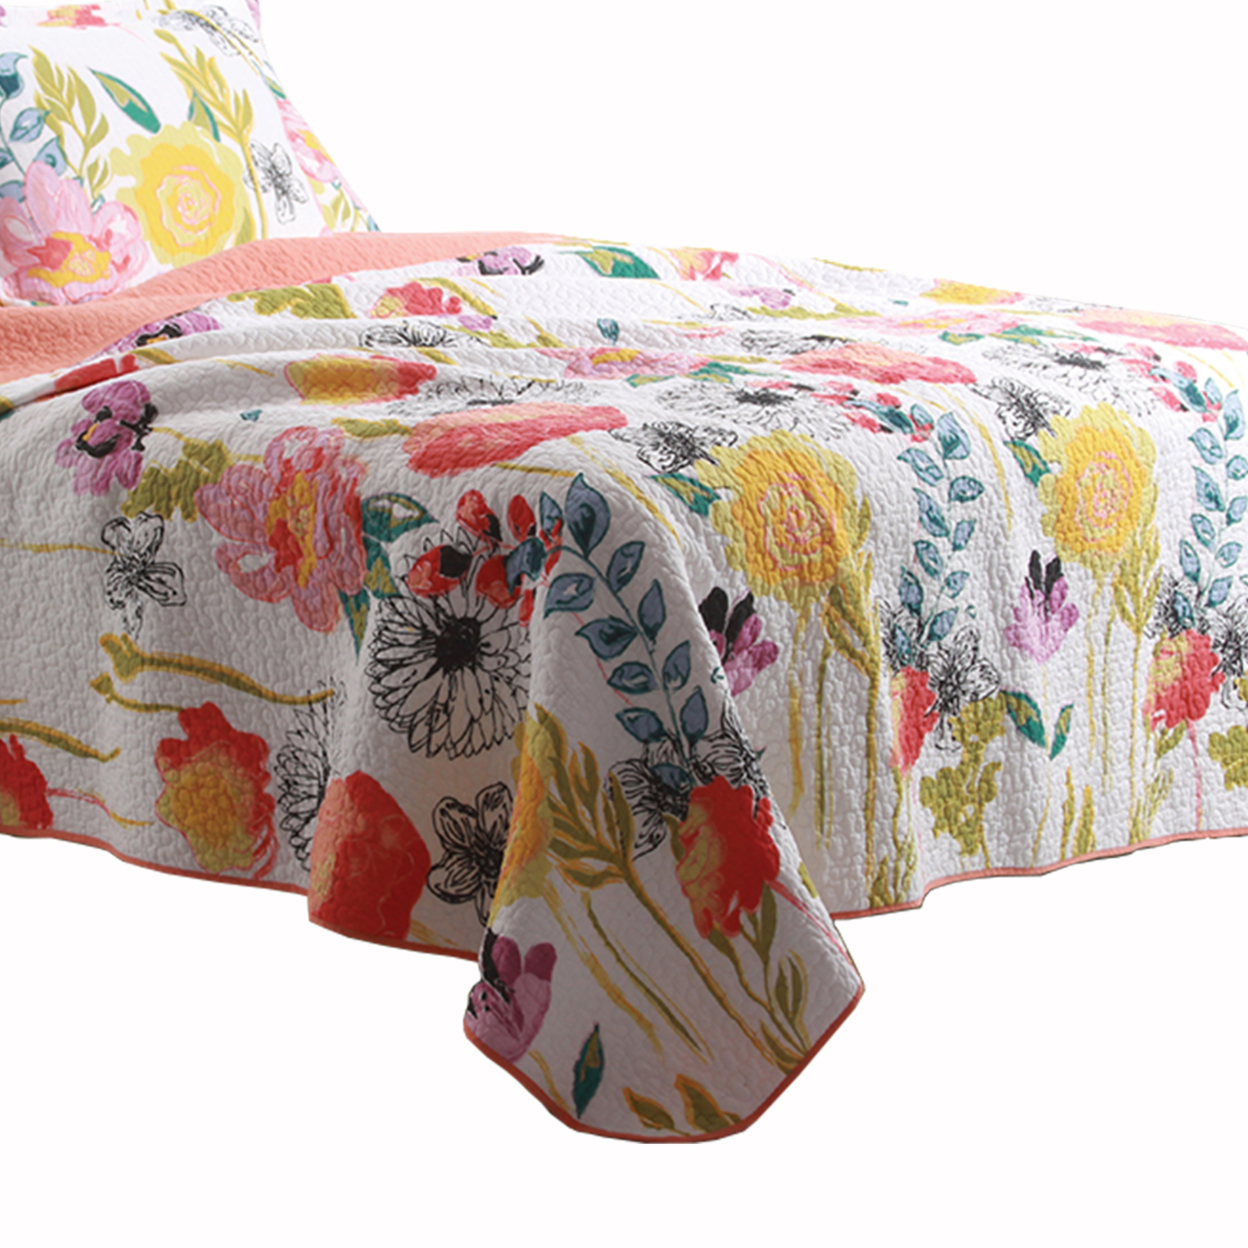 3 Piece Cotton Full Size Quilt Set With Stencil Flower Print, Multicolor- Saltoro Sherpi